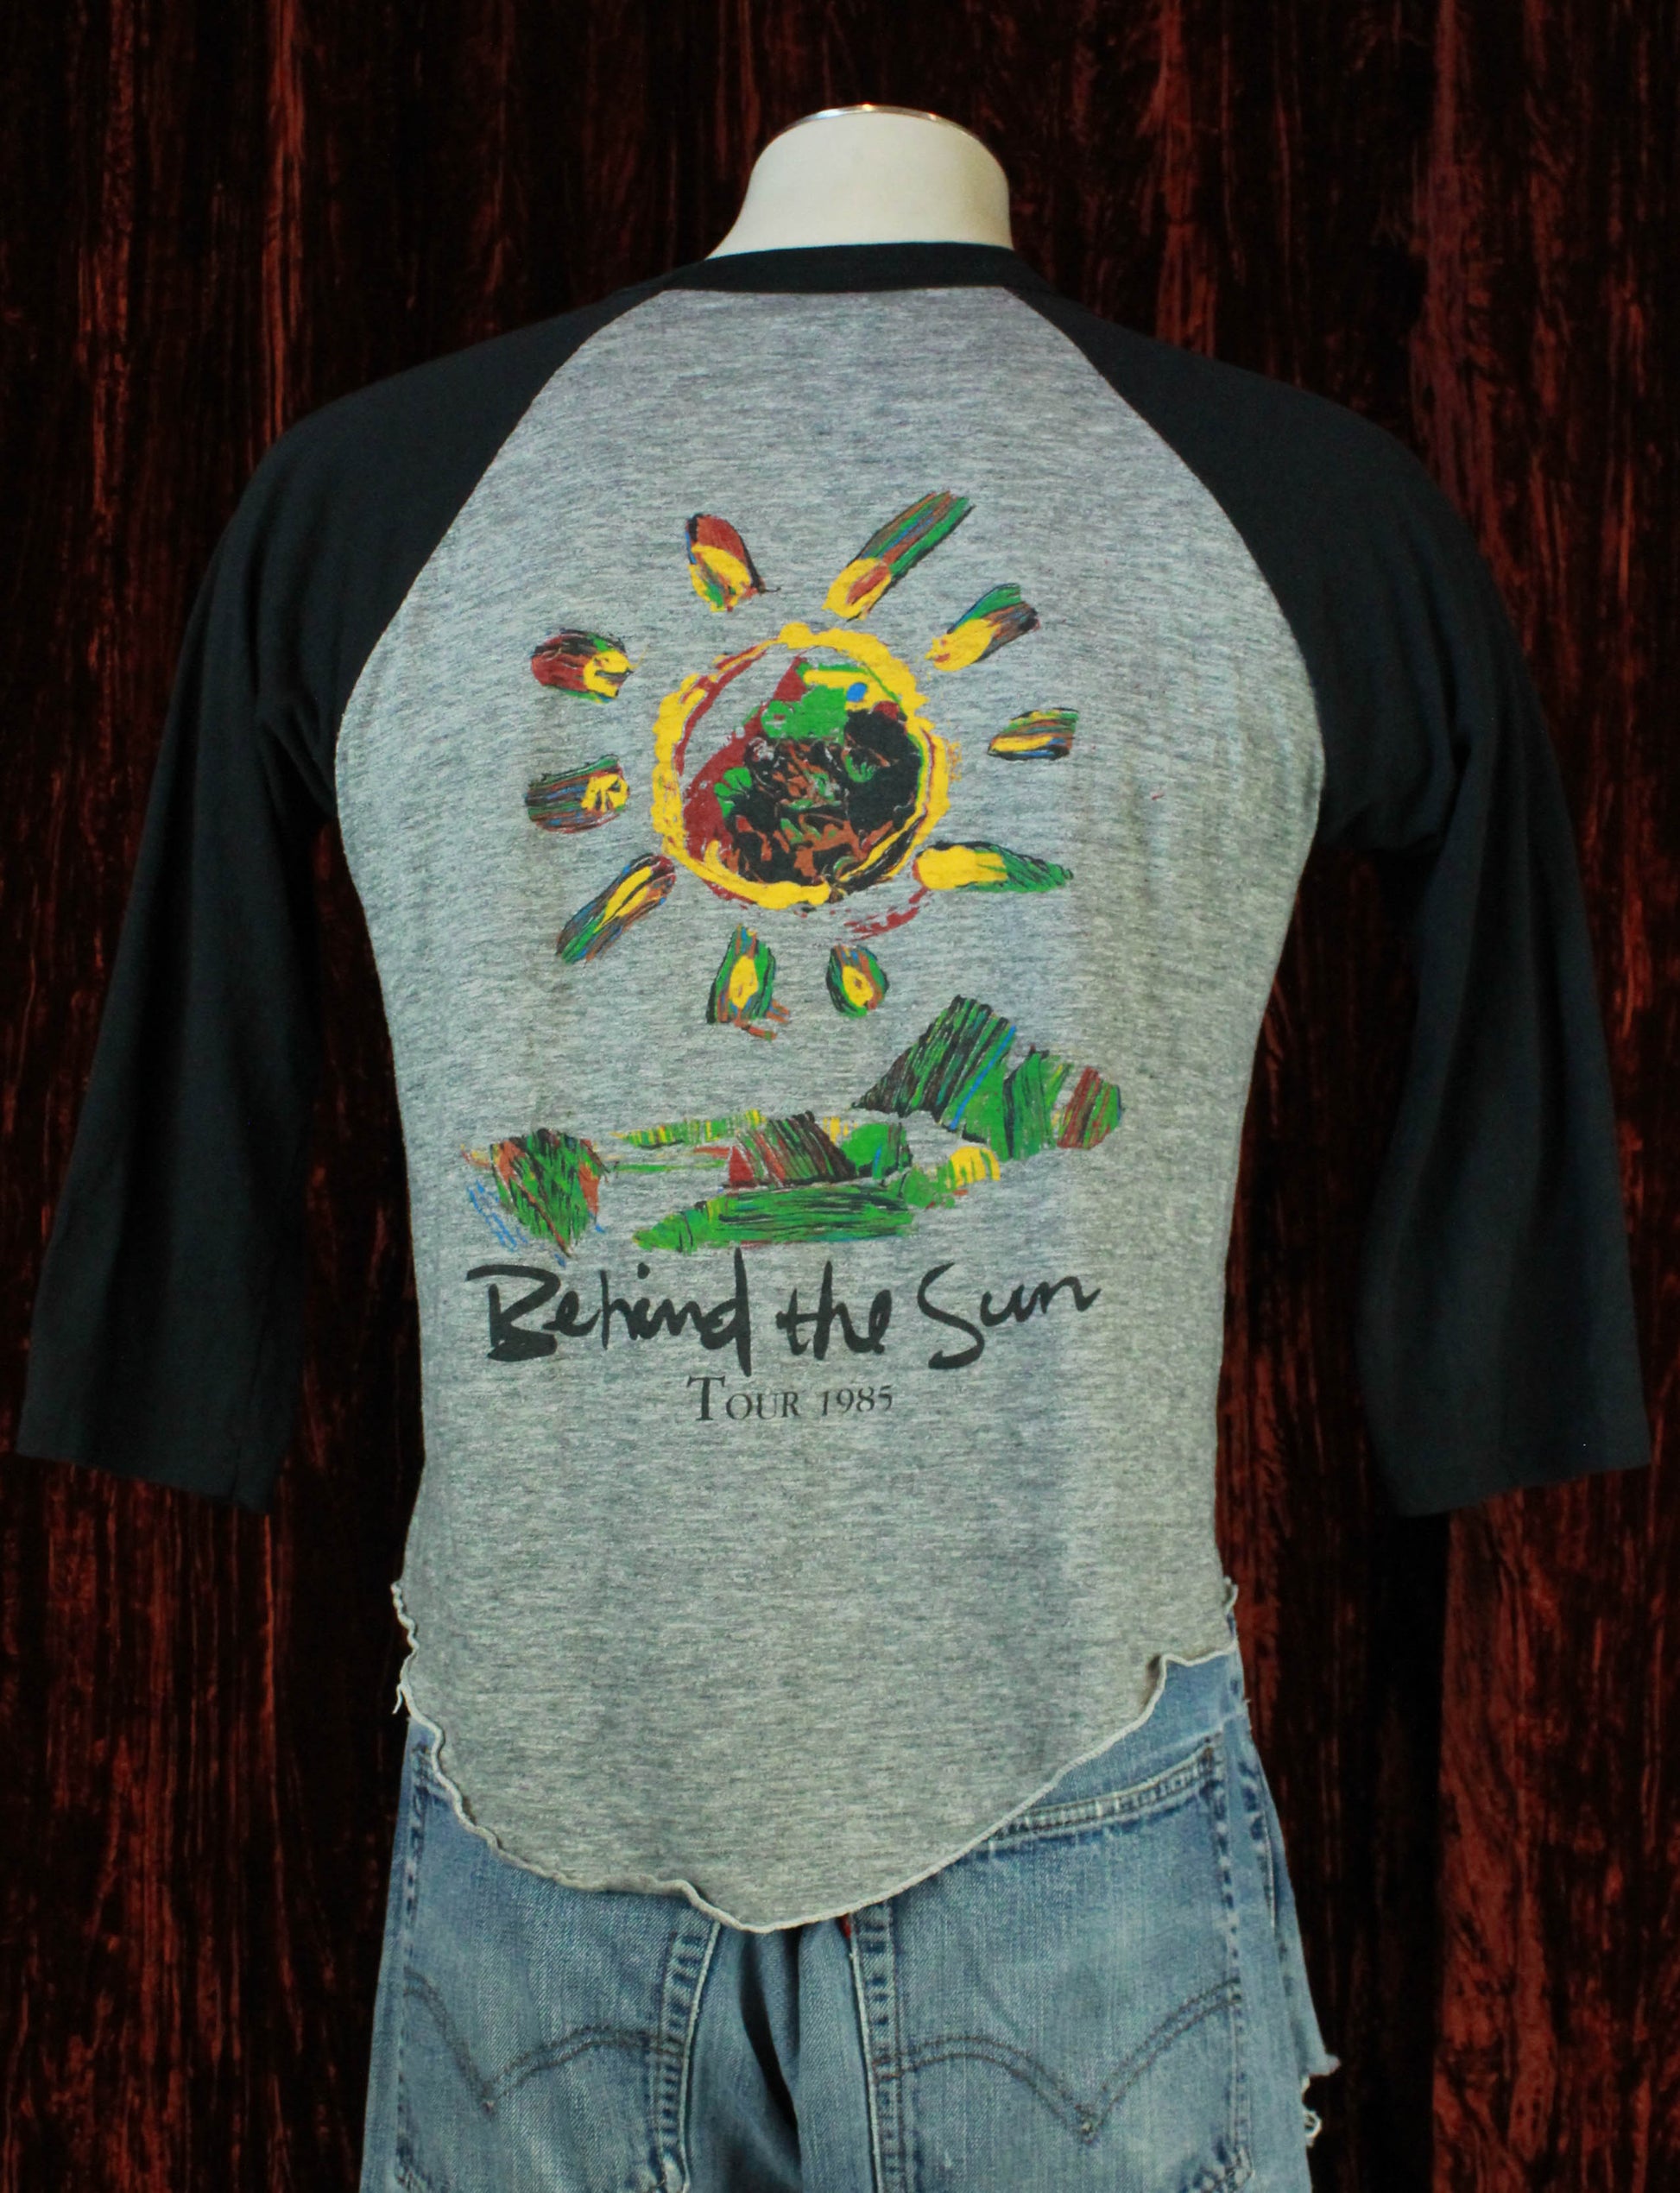 Vintage Eric Clapton Concert T Shirt 1985 Behind The Sun Tour Jersey - Large